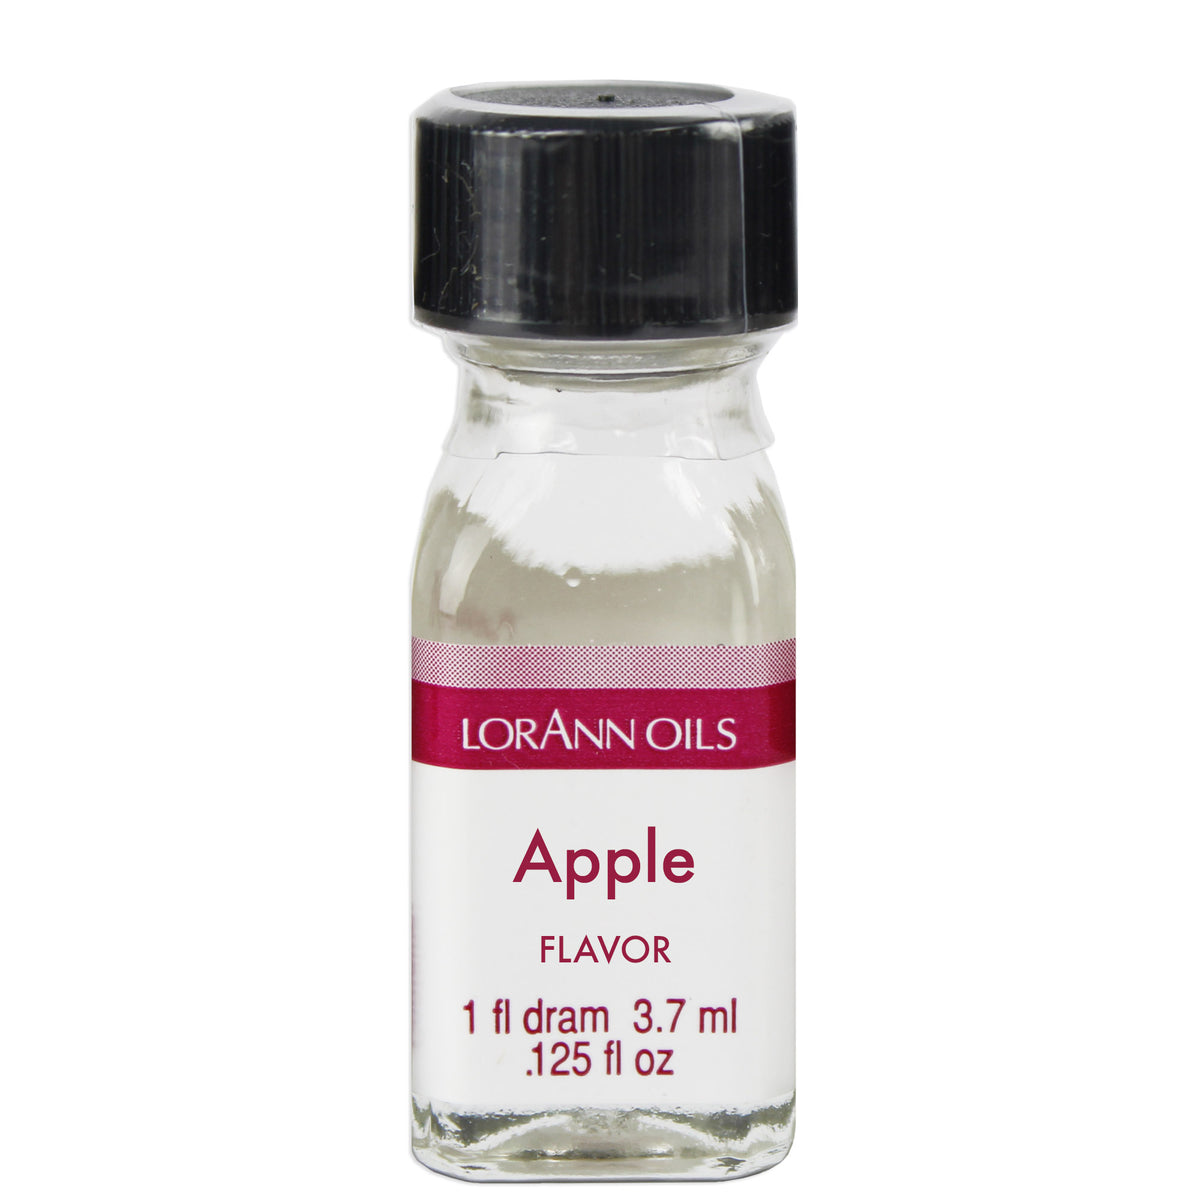 Apple Flavoring Oil